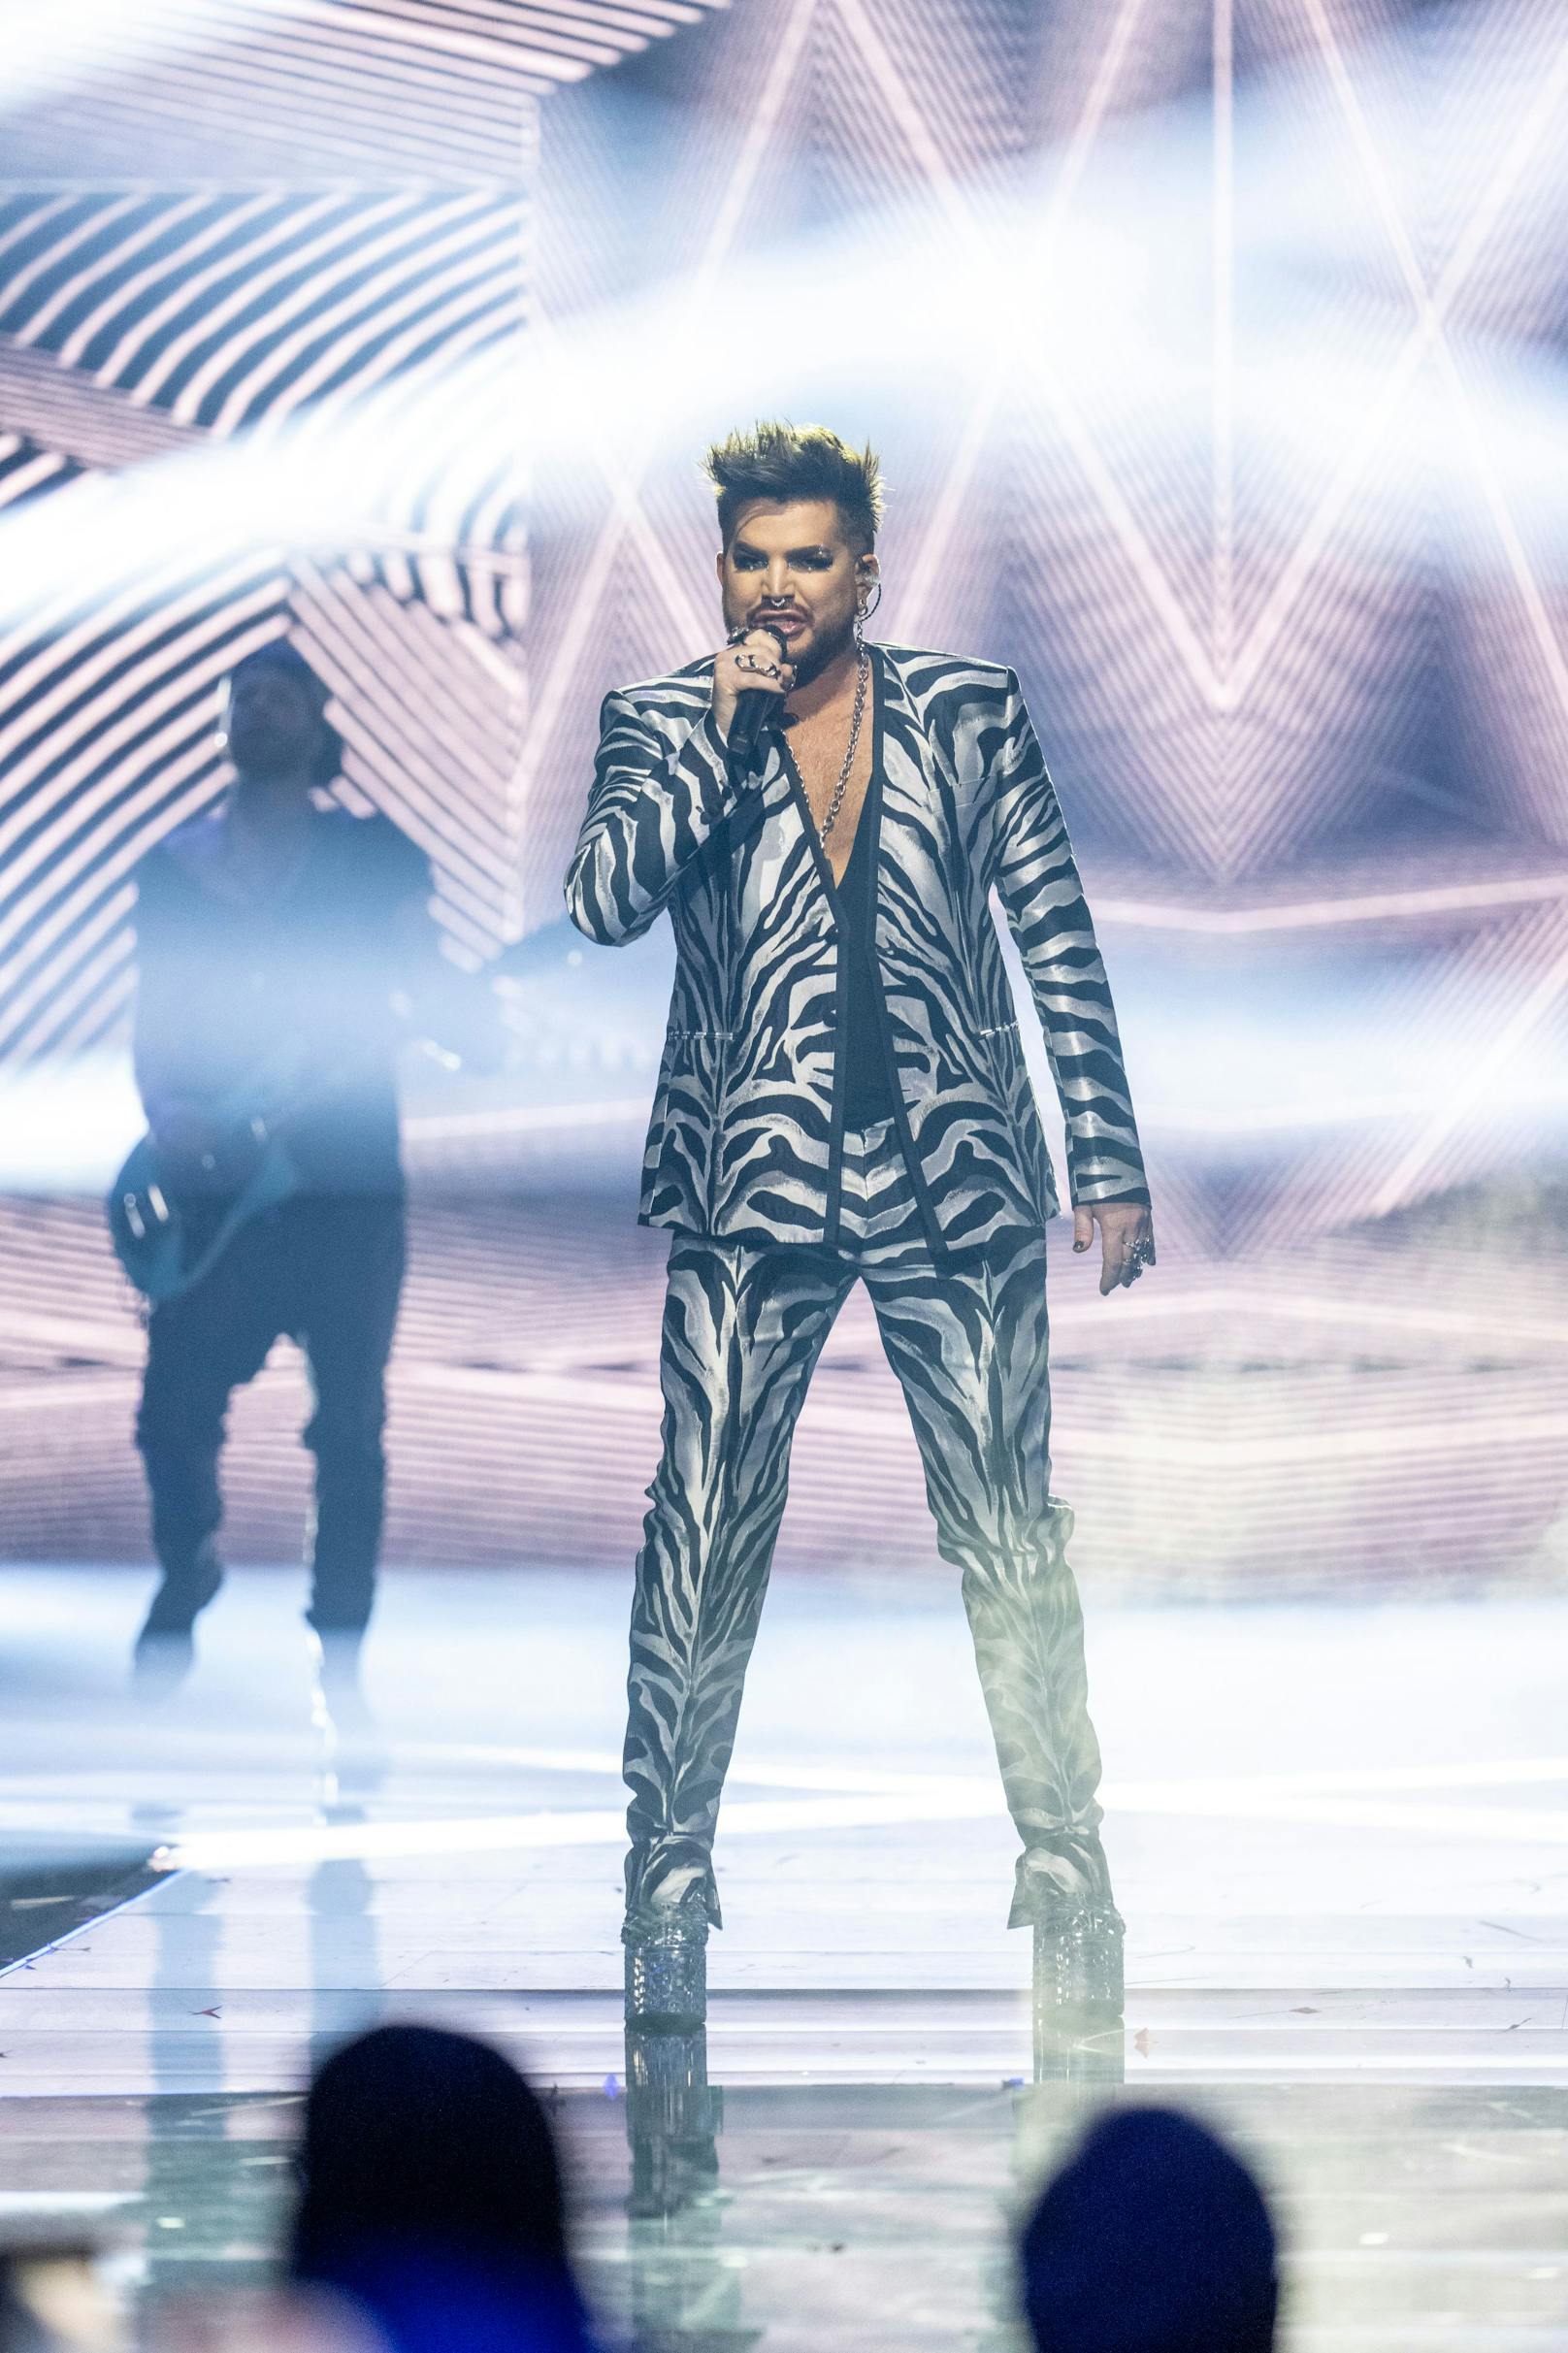 Der neue Queen-Frontmann – US-Superstar Adam Lambert